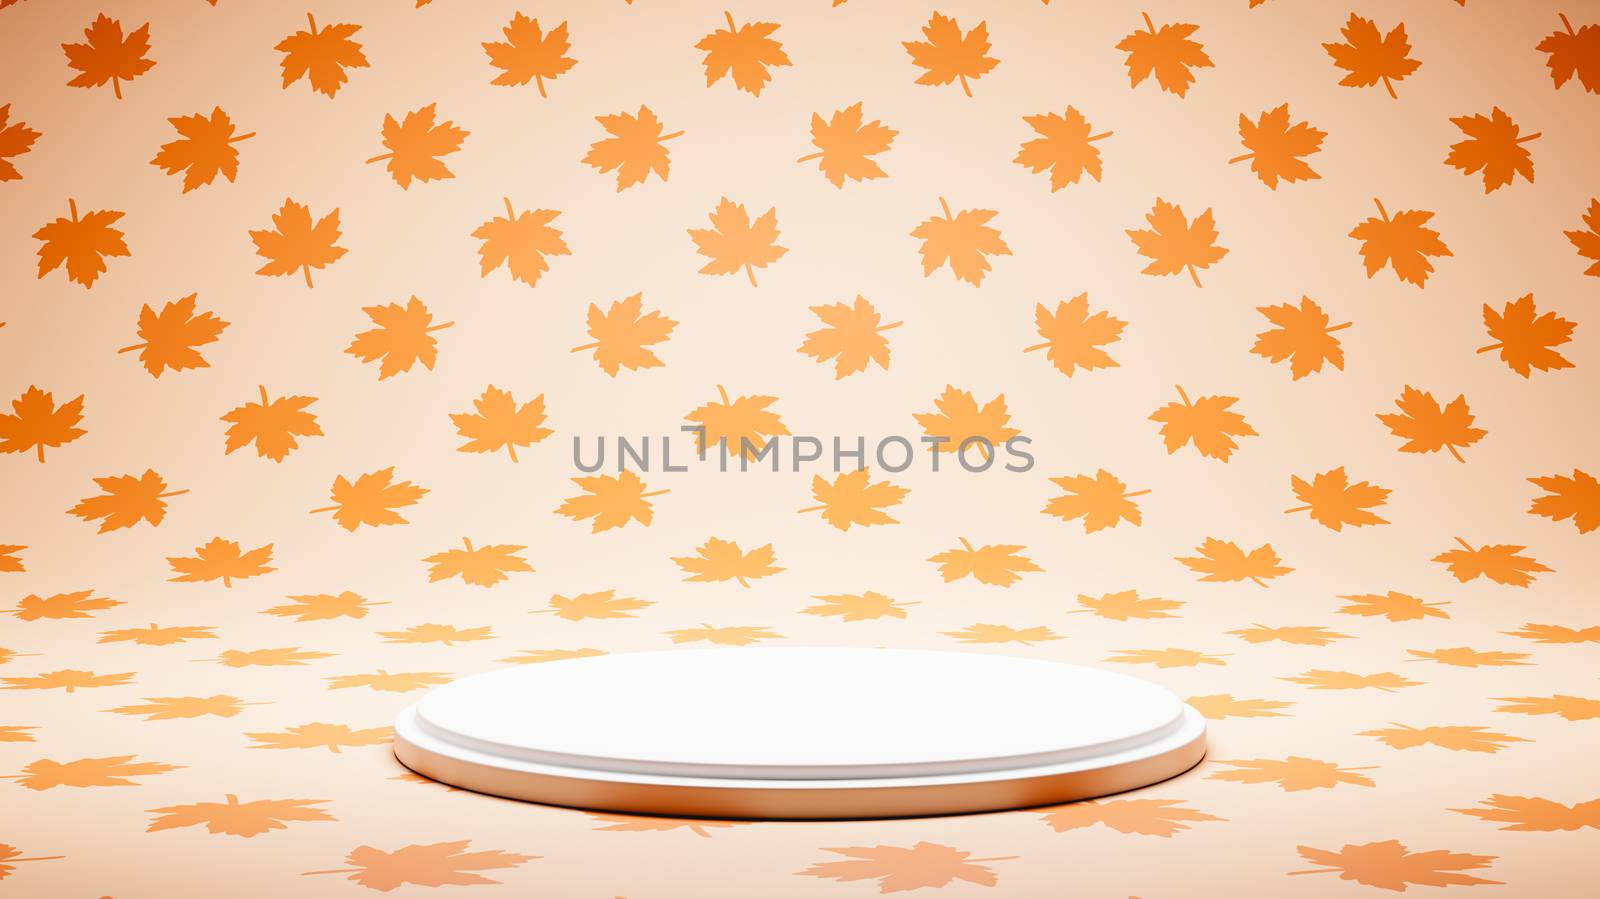 Empty White Platform on Orange Leaves Pattern Studio Background 3D Render Illustration